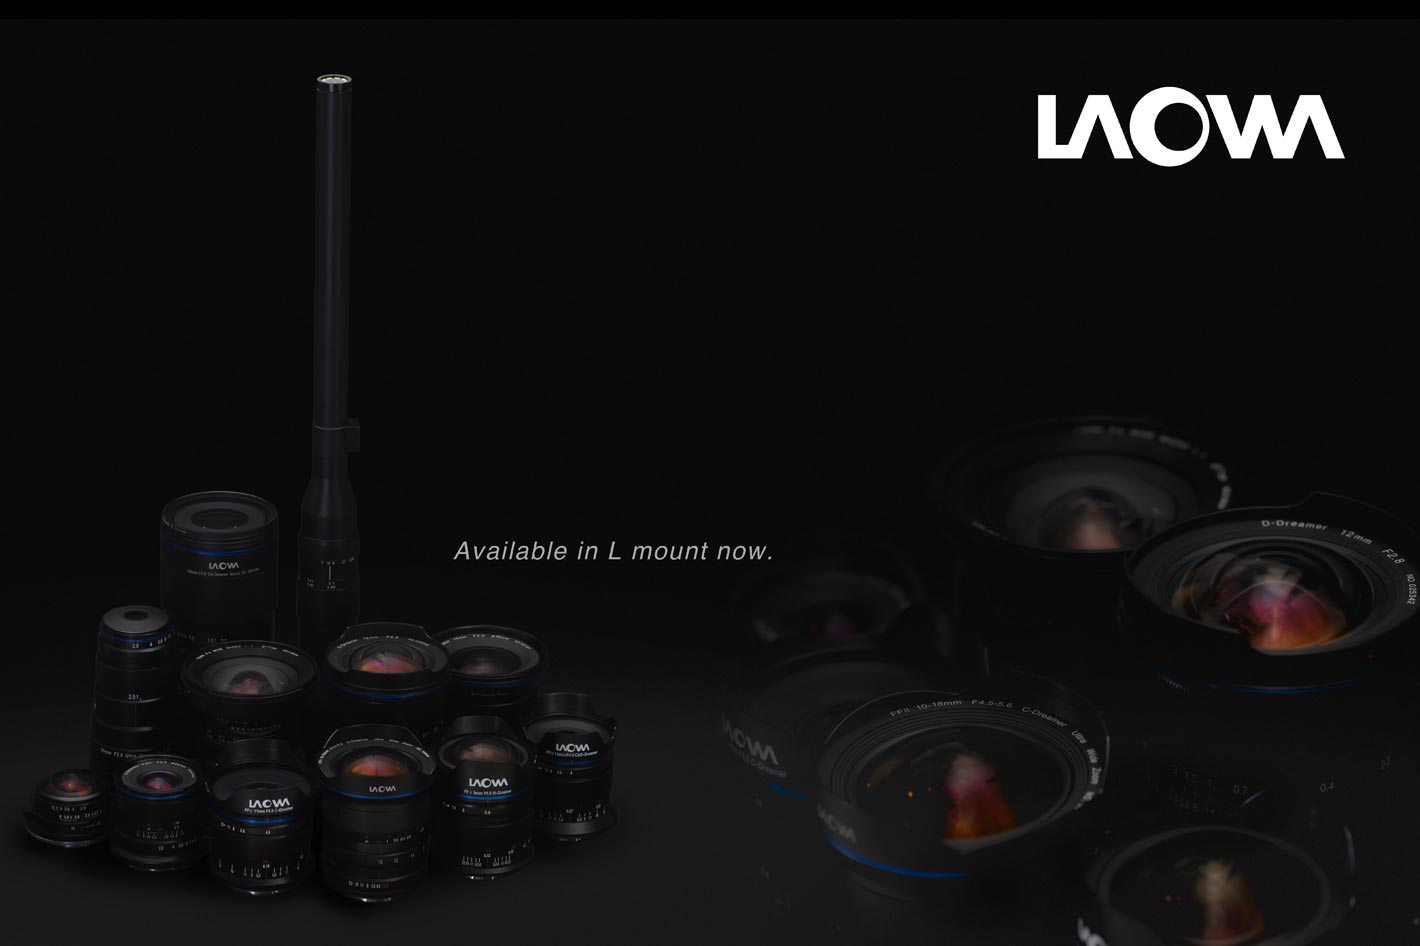  Venus Optics announces 4 new L mount lenses